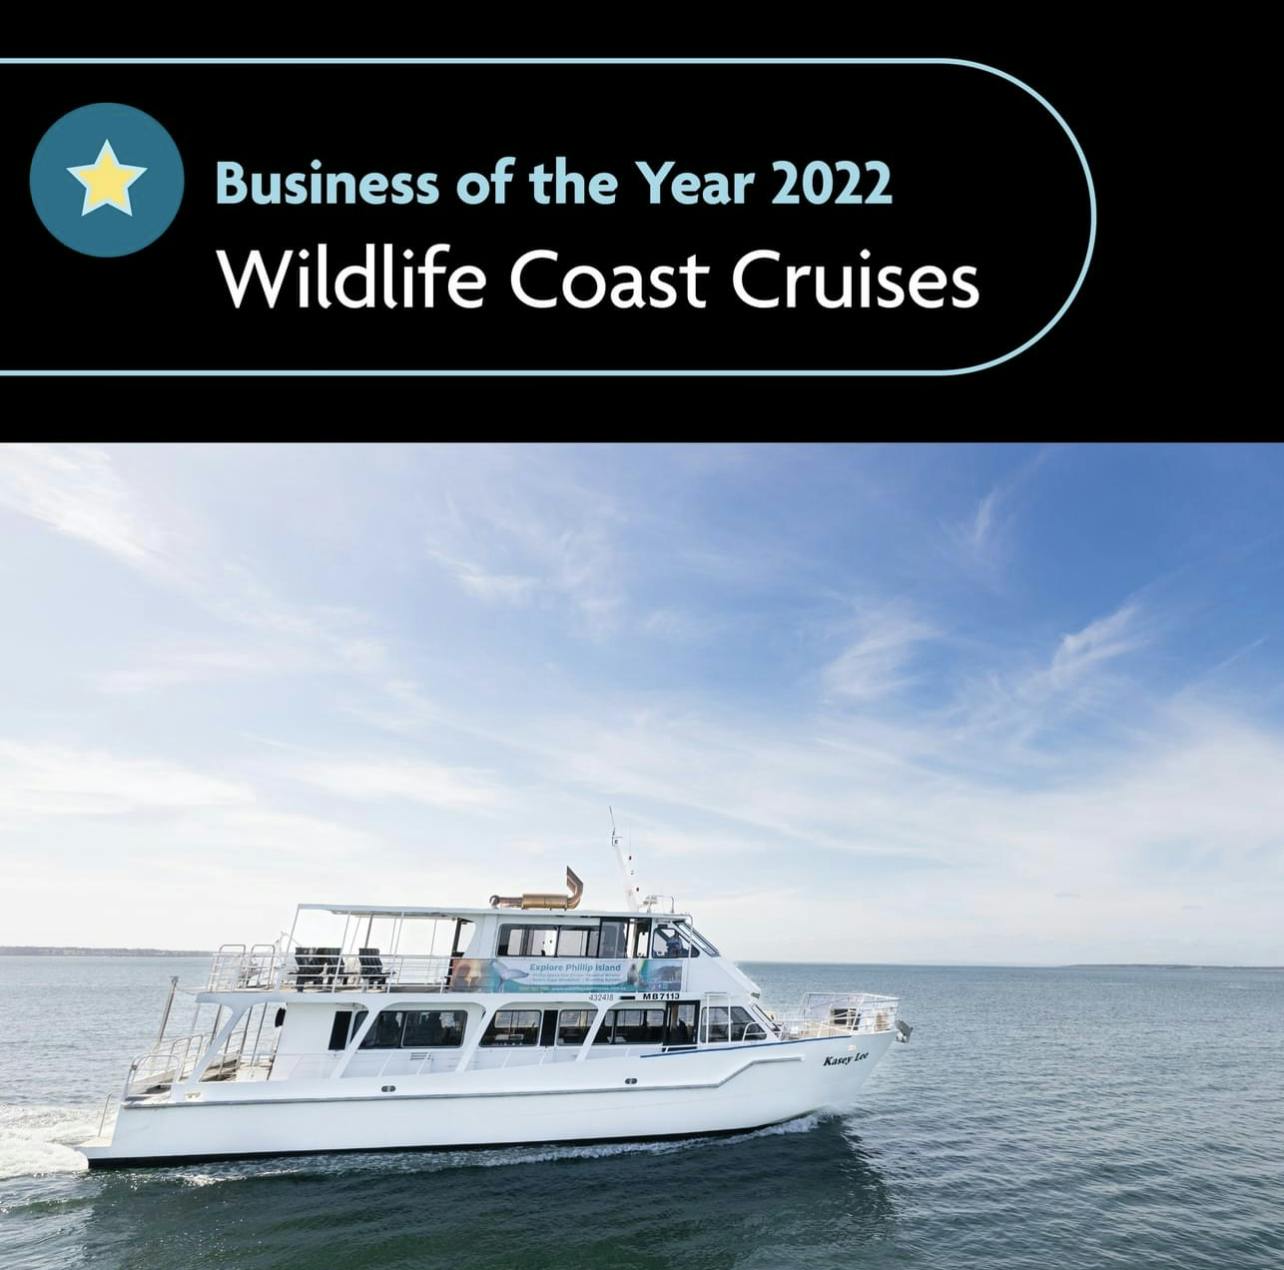 Award winning Wildlife Coast Cruises